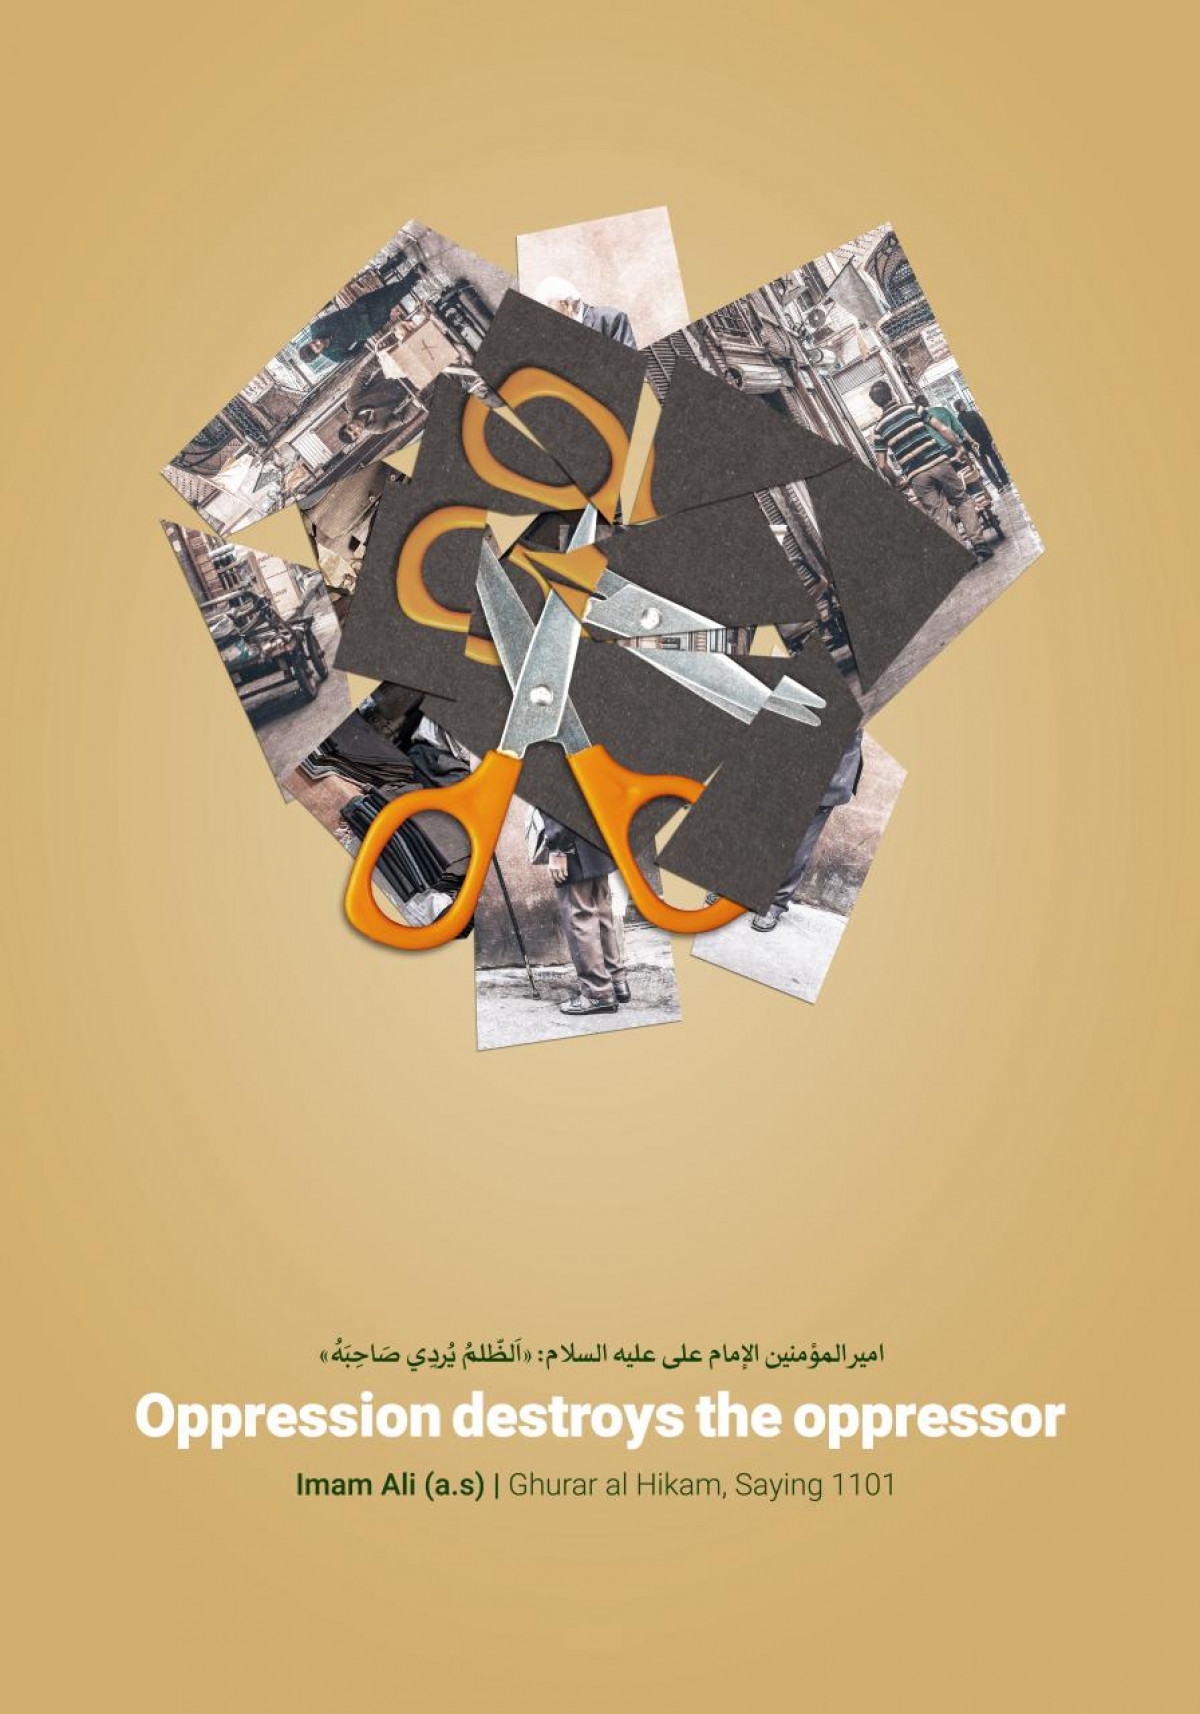 Oppression destroys the oppressor